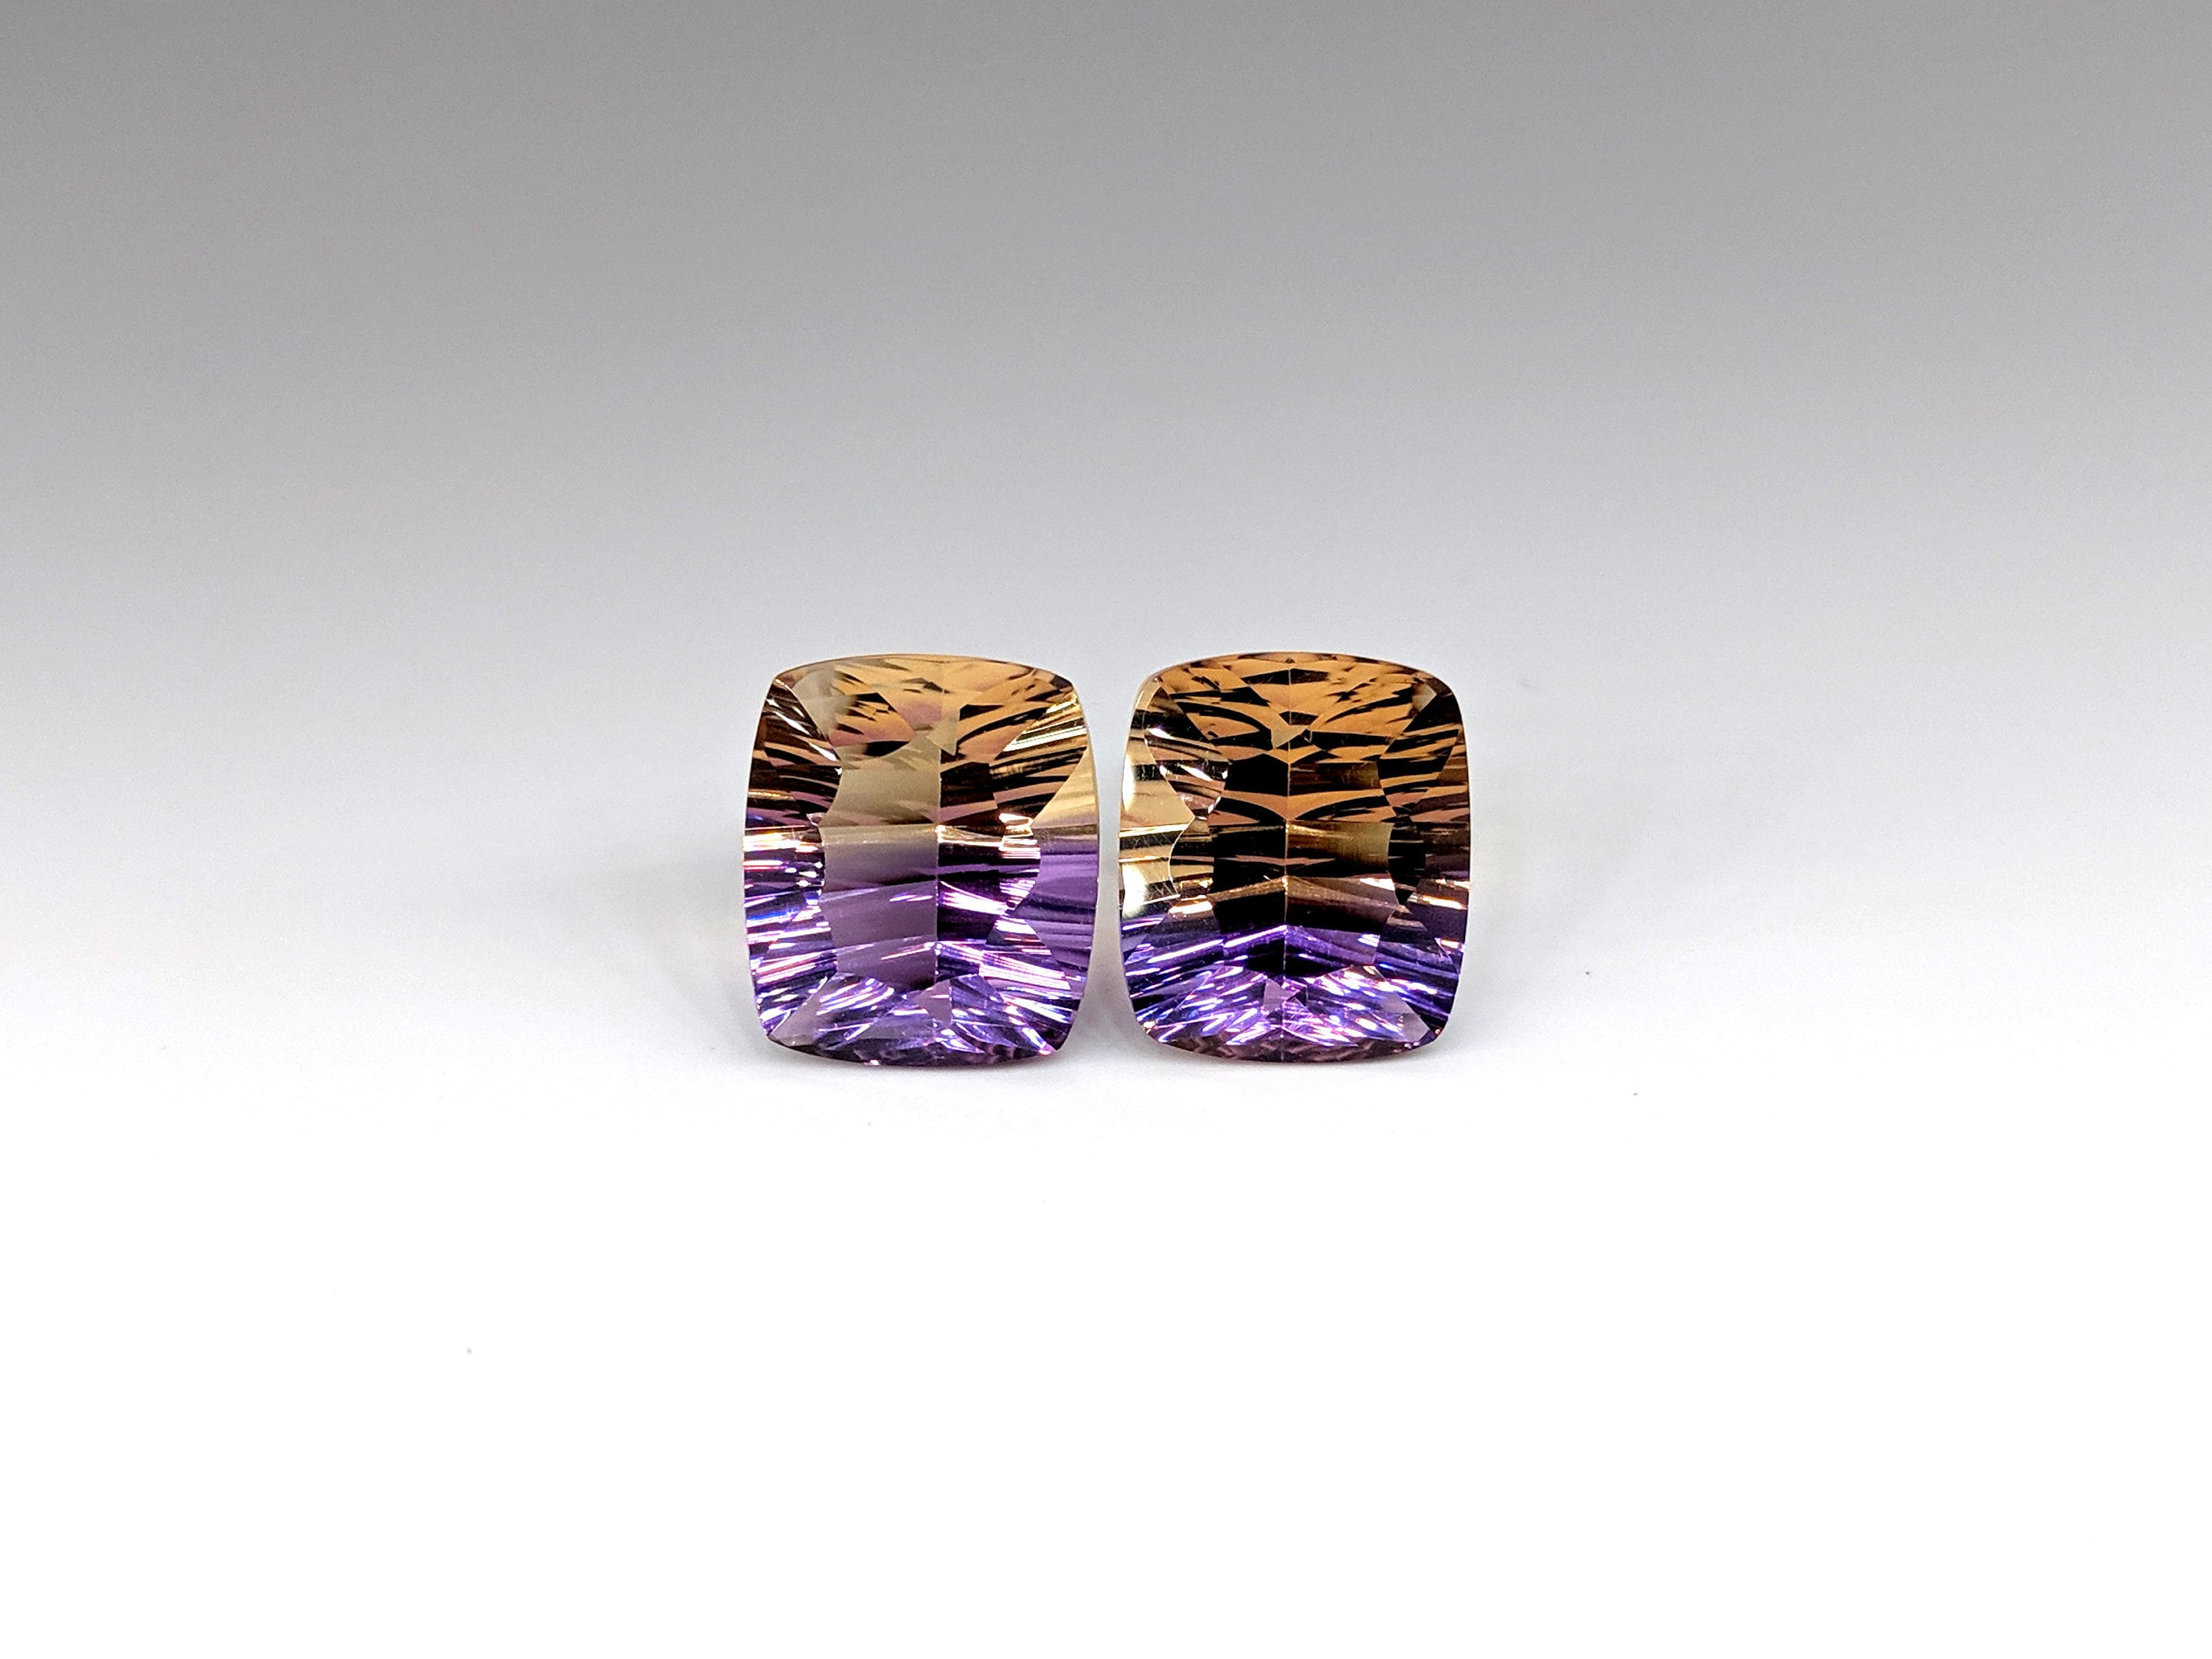 Gemstones-Ametrine 14x12mm Cushion Shape Loose Gemstone- Beautiful Purple/Orange coloring Concave Cut Gemstone - NNJGemstones